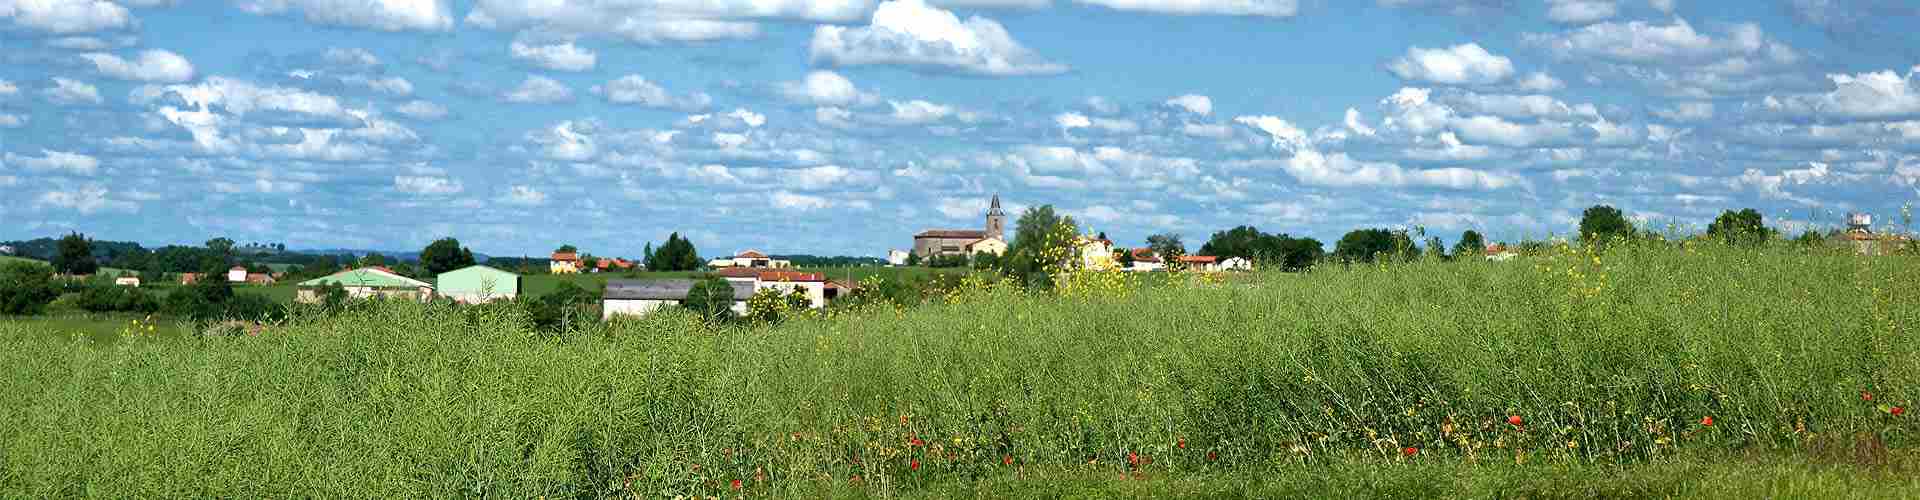 Casas rurales cerca de la Casa de Salvador Dalí en Portlligat de Cadaqués
           
           


          
          
          

